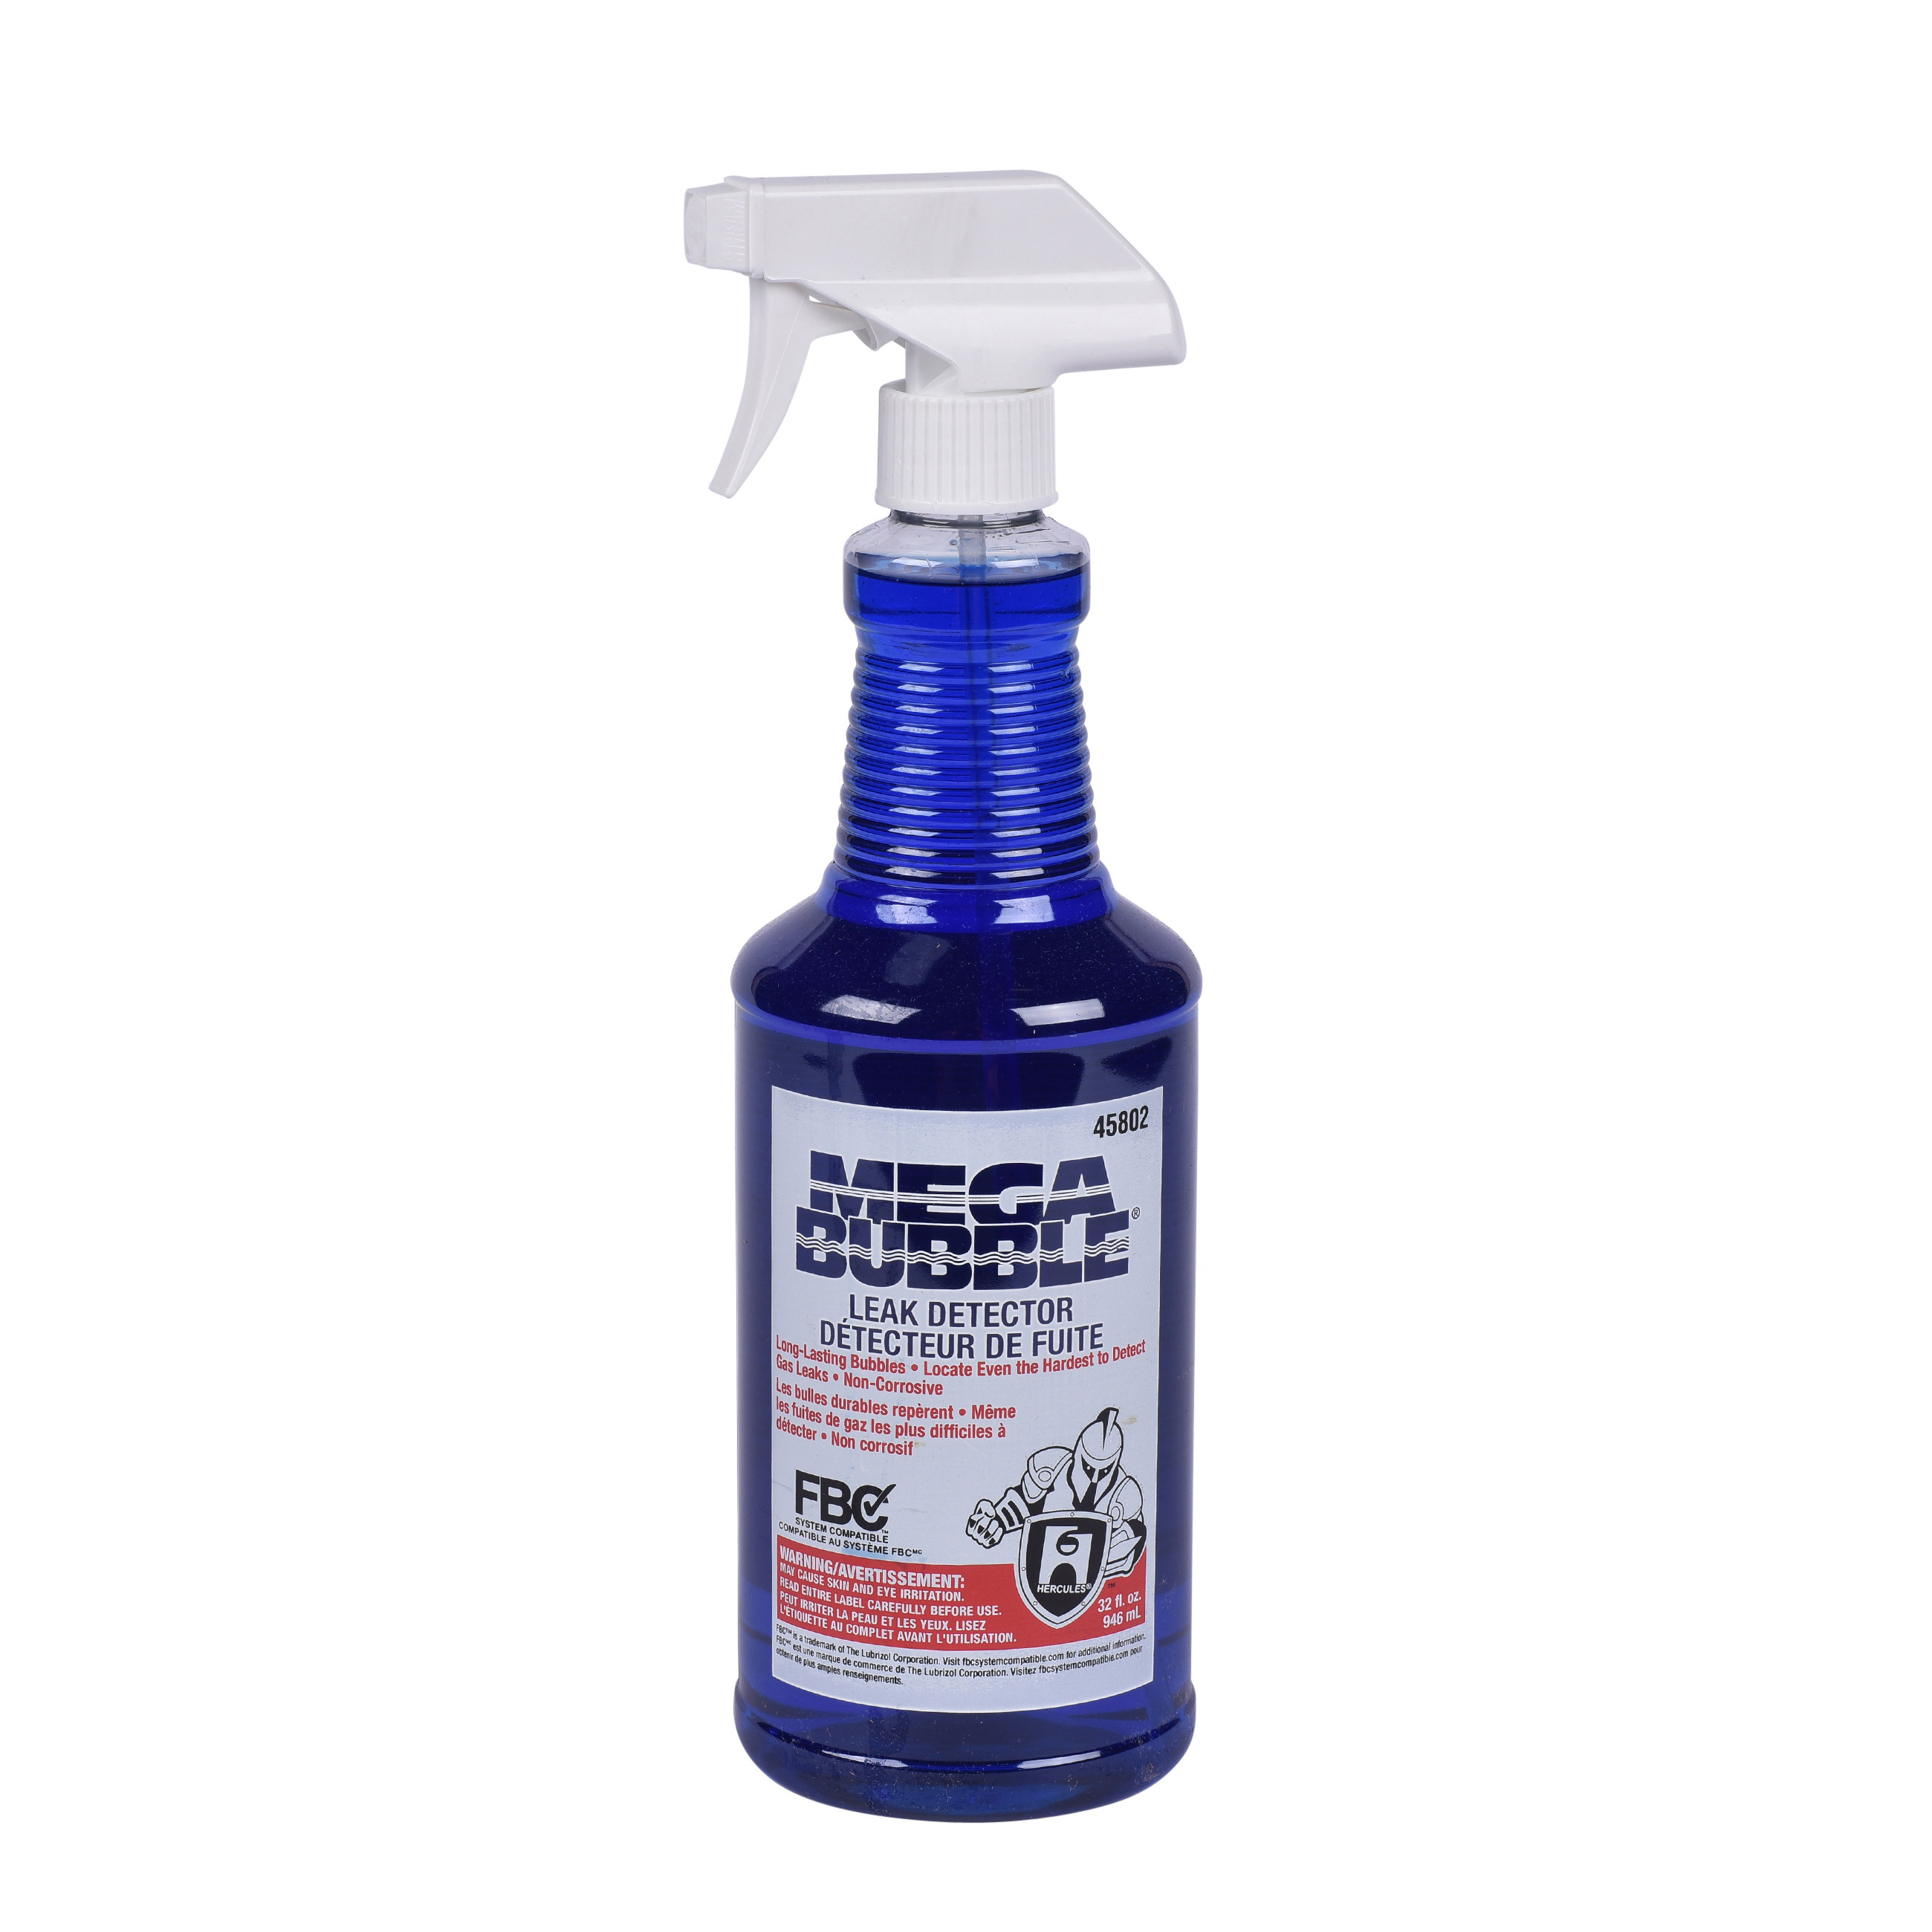 Hercules® Megabubble® 45802 Leak Detector With Sprayer, 32 oz Spray Bottle, Liquid, Blue, Odorless